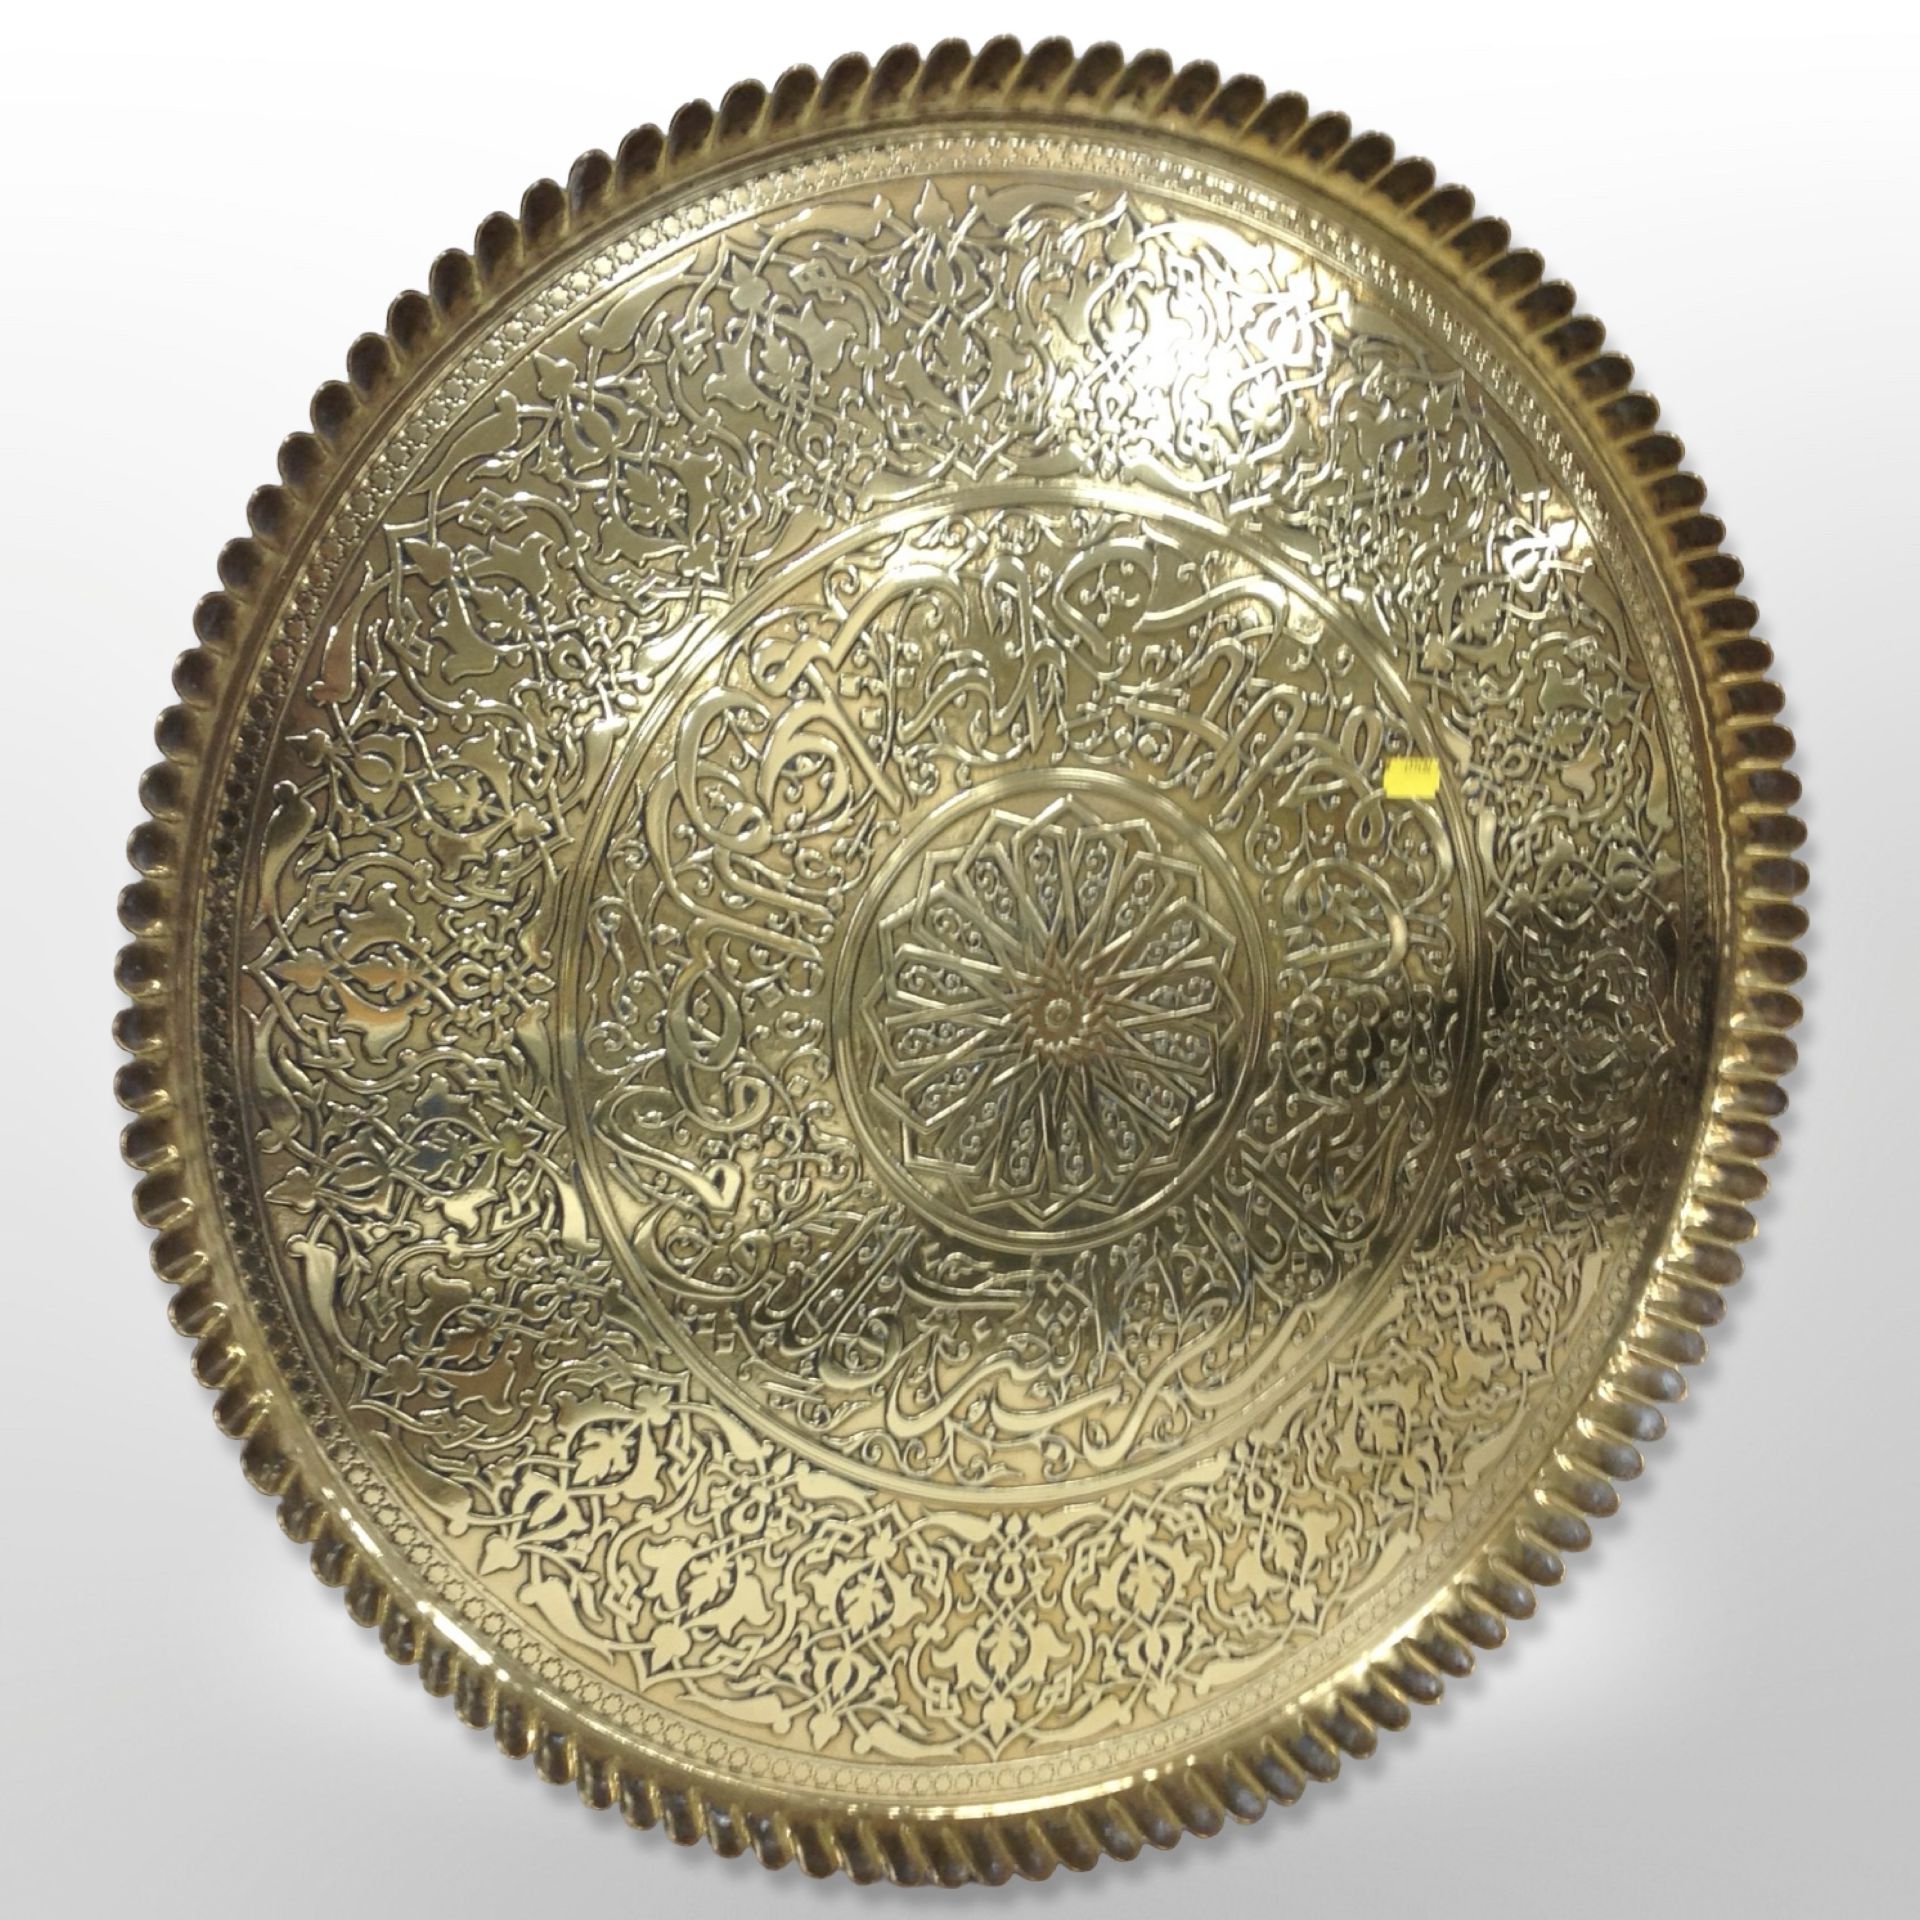 A large decorative brass charger, diameter 65cm.